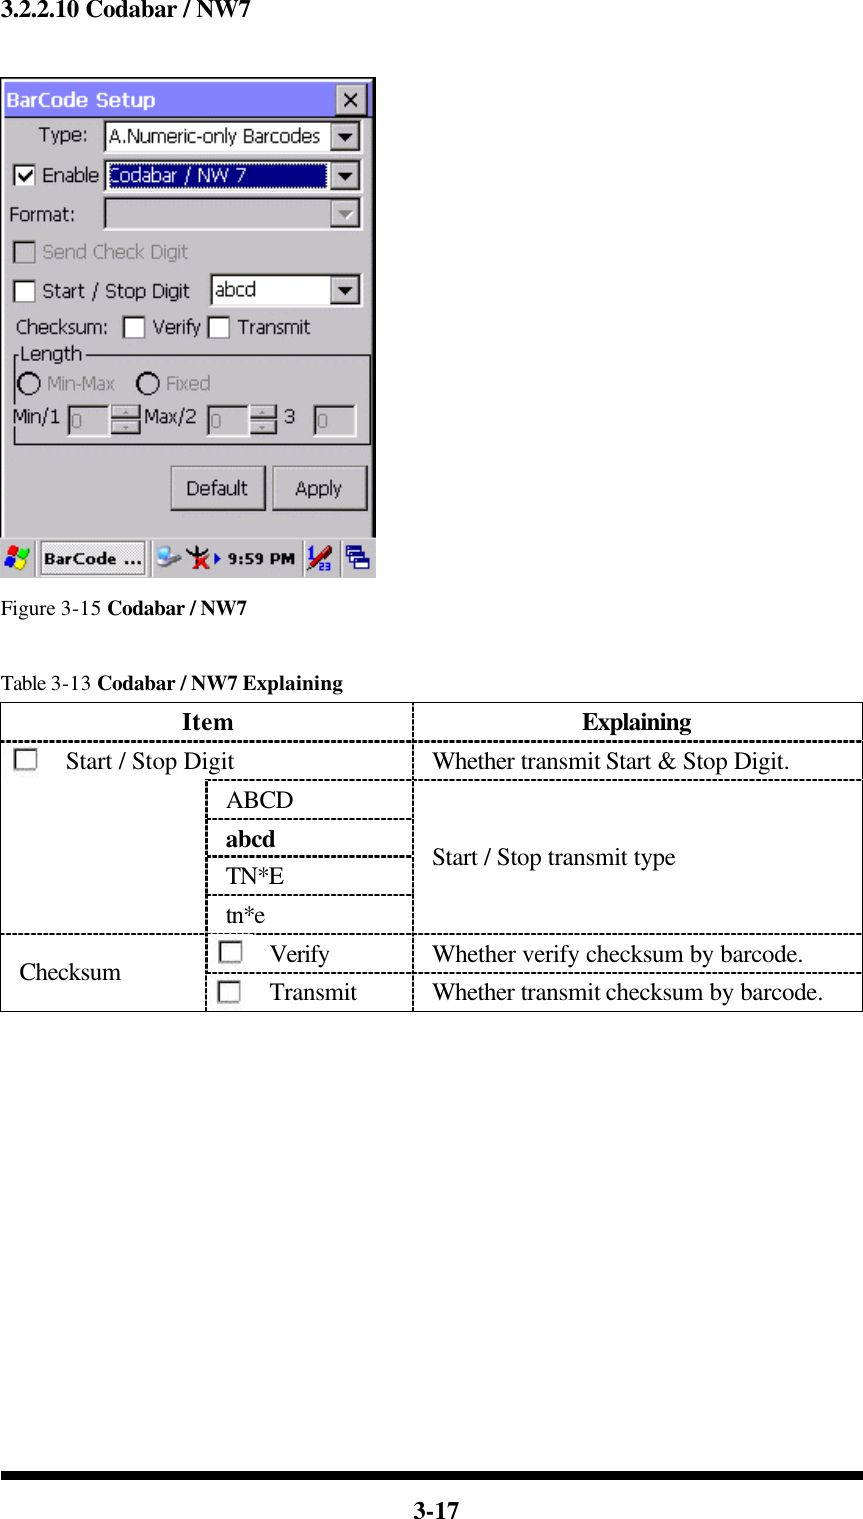  3-17 3.2.2.10 Codabar / NW7   Figure 3-15 Codabar / NW7  Table 3-13 Codabar / NW7 Explaining Item Explaining Start / Stop Digit Whether transmit Start &amp; Stop Digit. ABCD abcd   TN*E  tn*e Start / Stop transmit type Verify Whether verify checksum by barcode. Checksum Transmit Whether transmit checksum by barcode.            